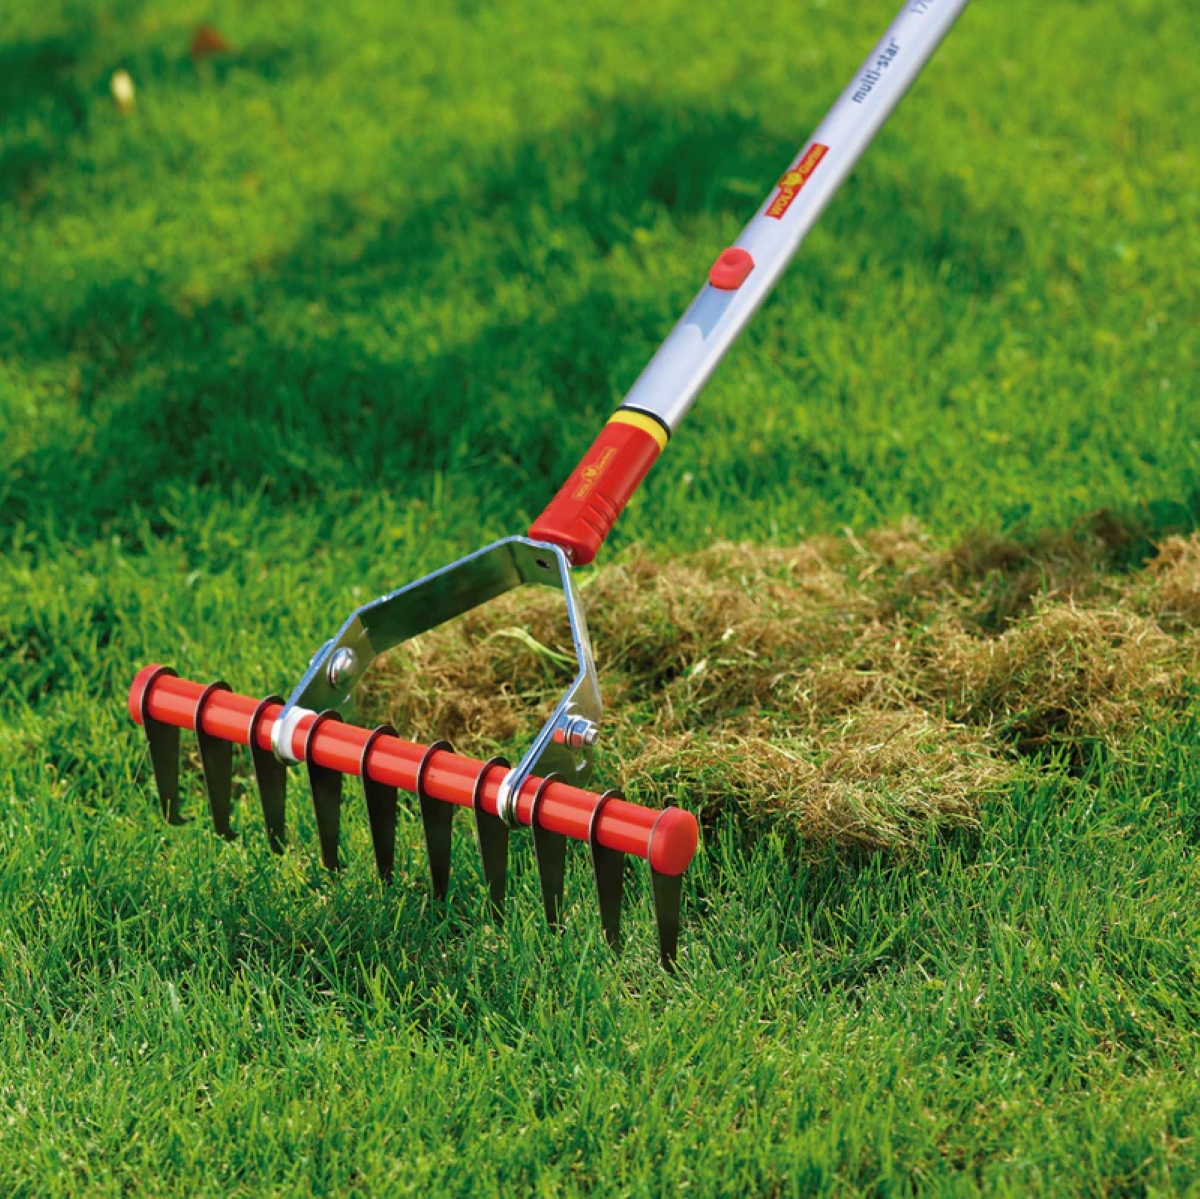 Dethatching rake used on green grass.